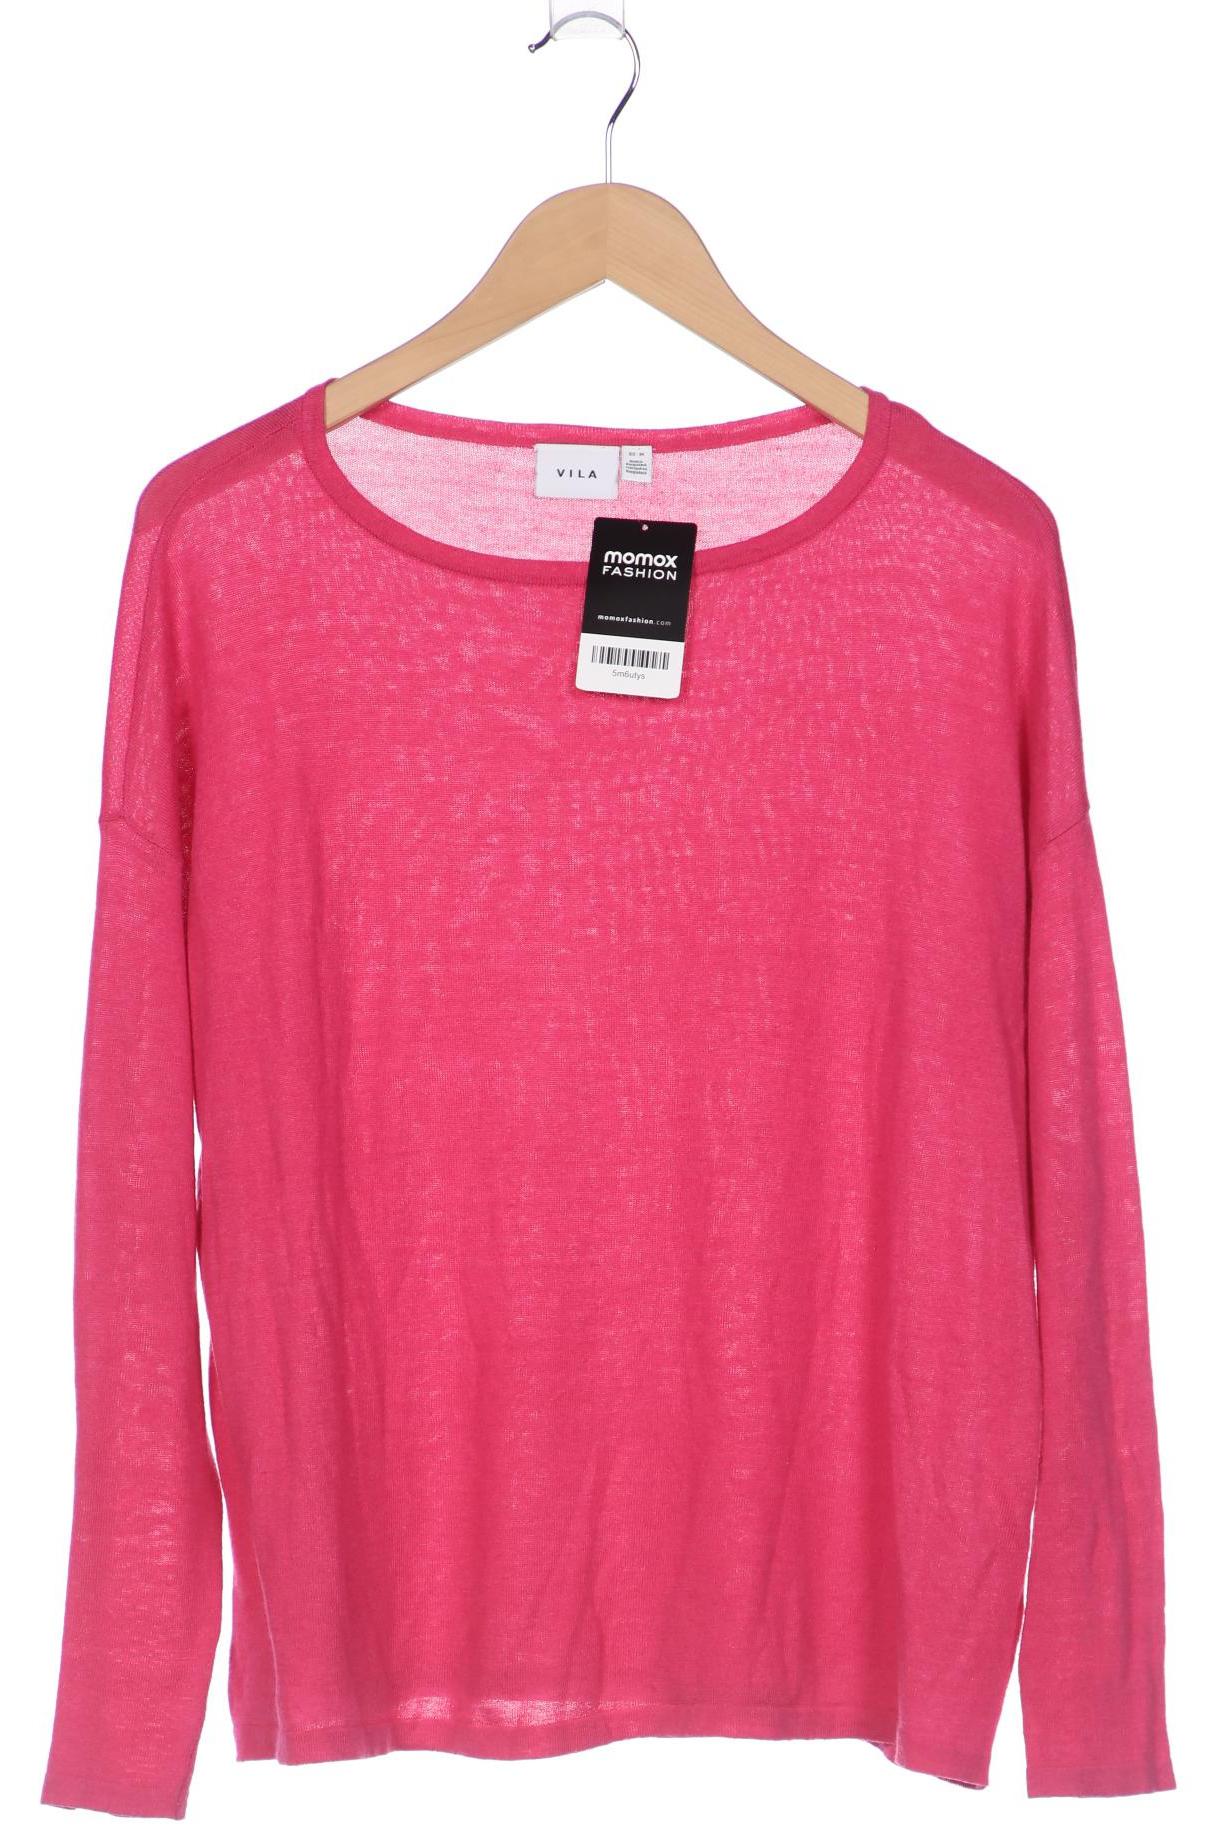 Vila Damen Pullover, pink, Gr. 38 von Vila